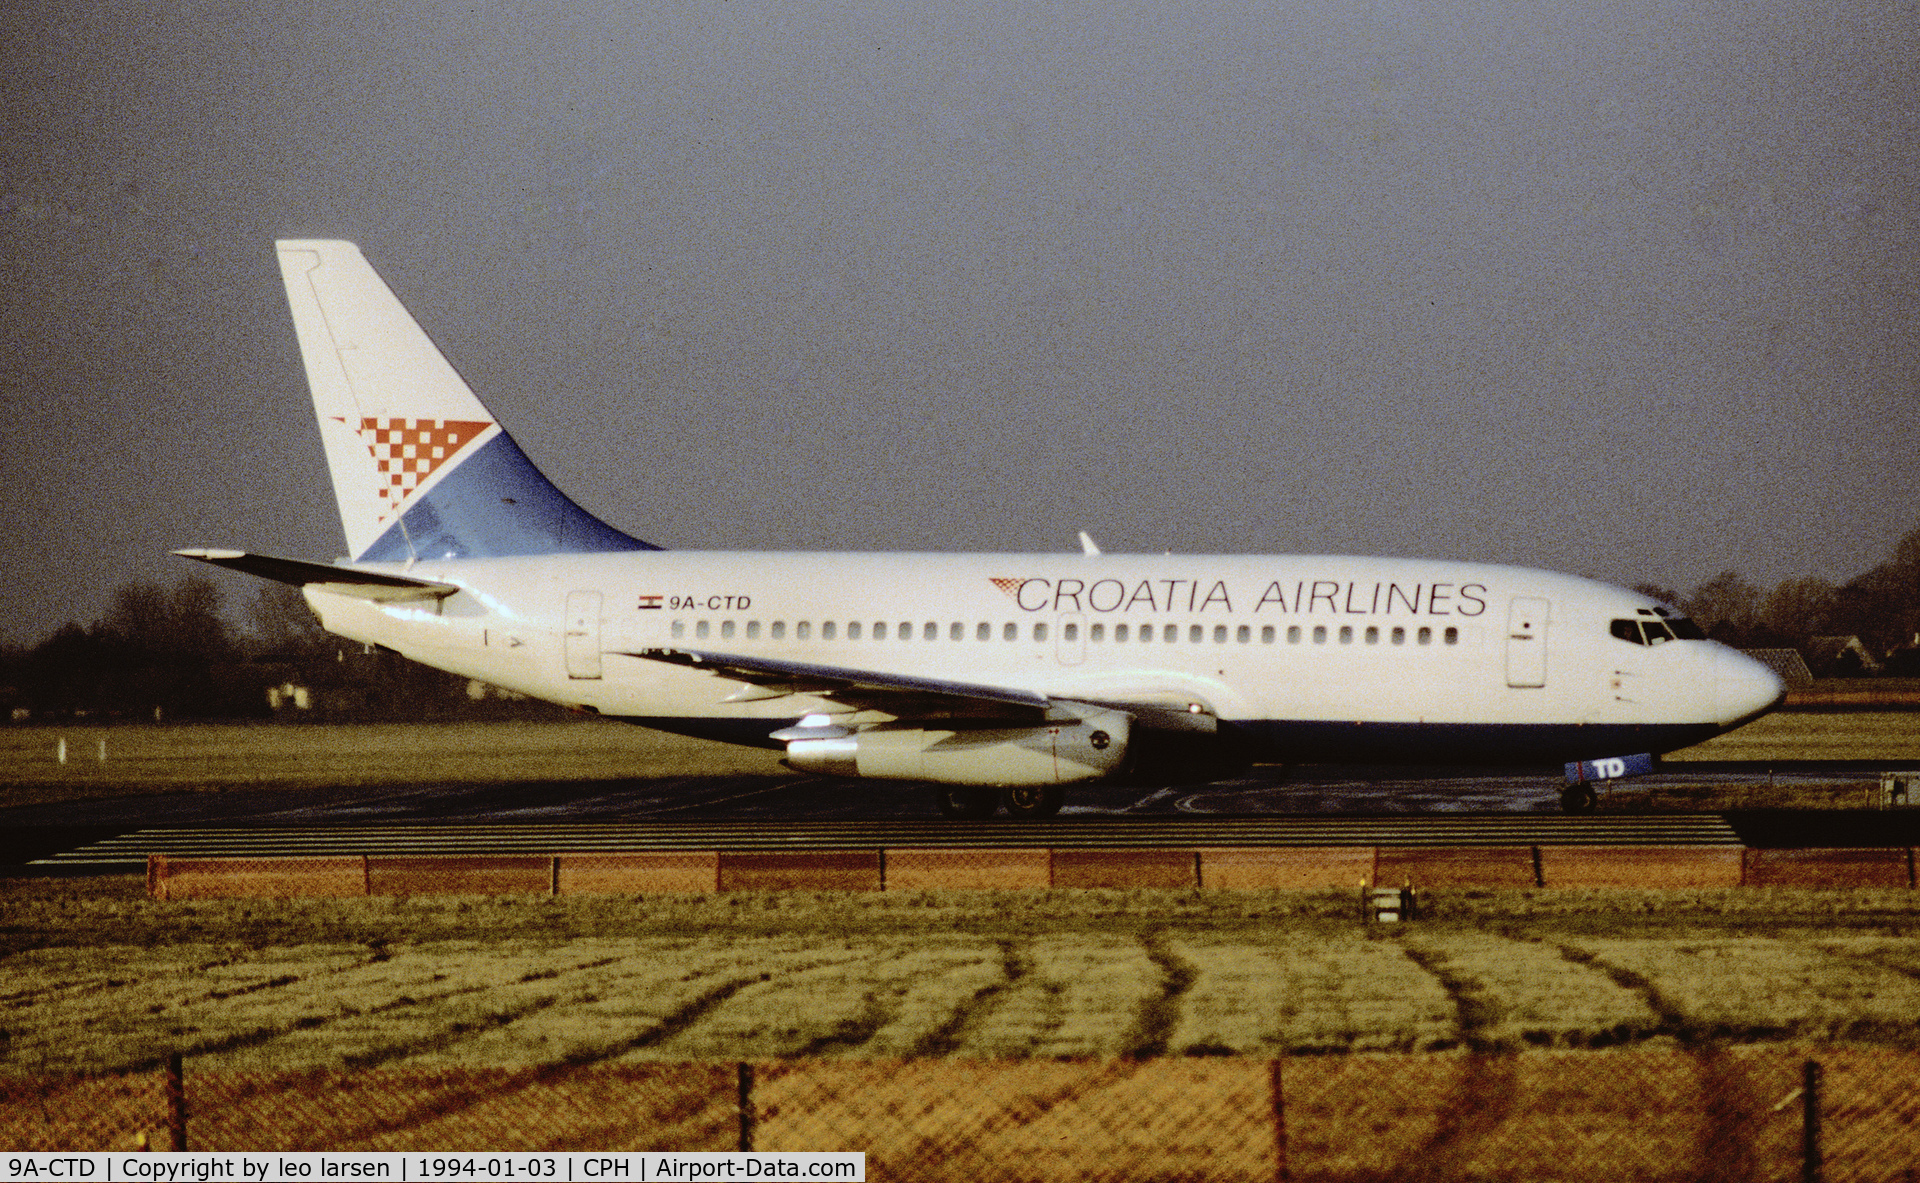 9A-CTD, 1981 Boeing 737-230 C/N 22140, Copenhagen 3.1.1994